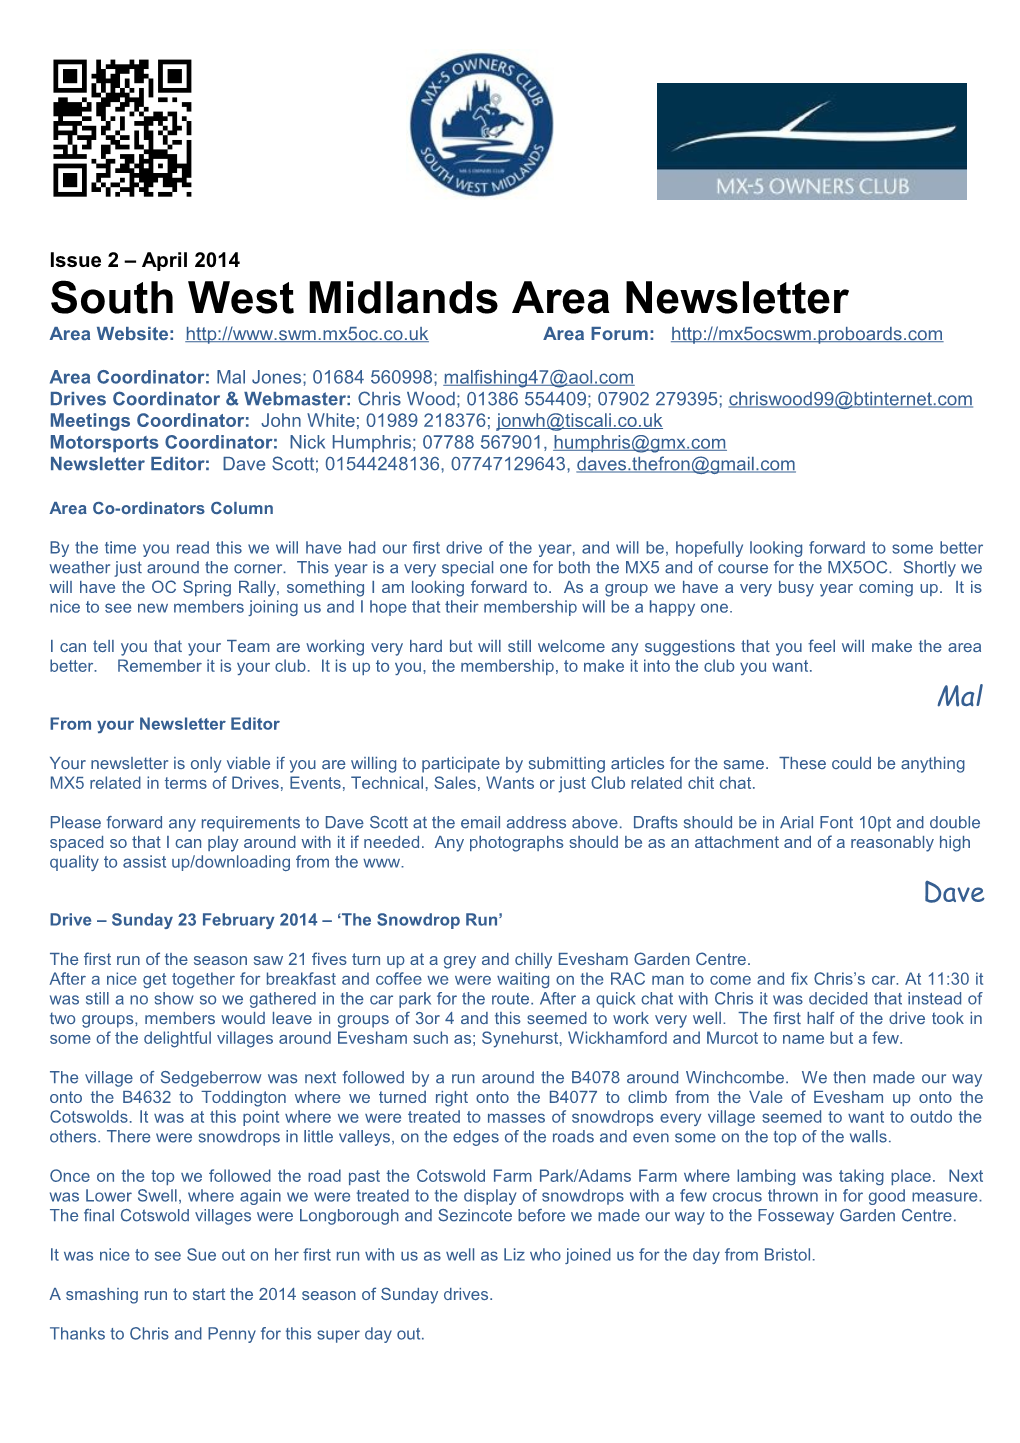 South West Midlands Area Newsletter